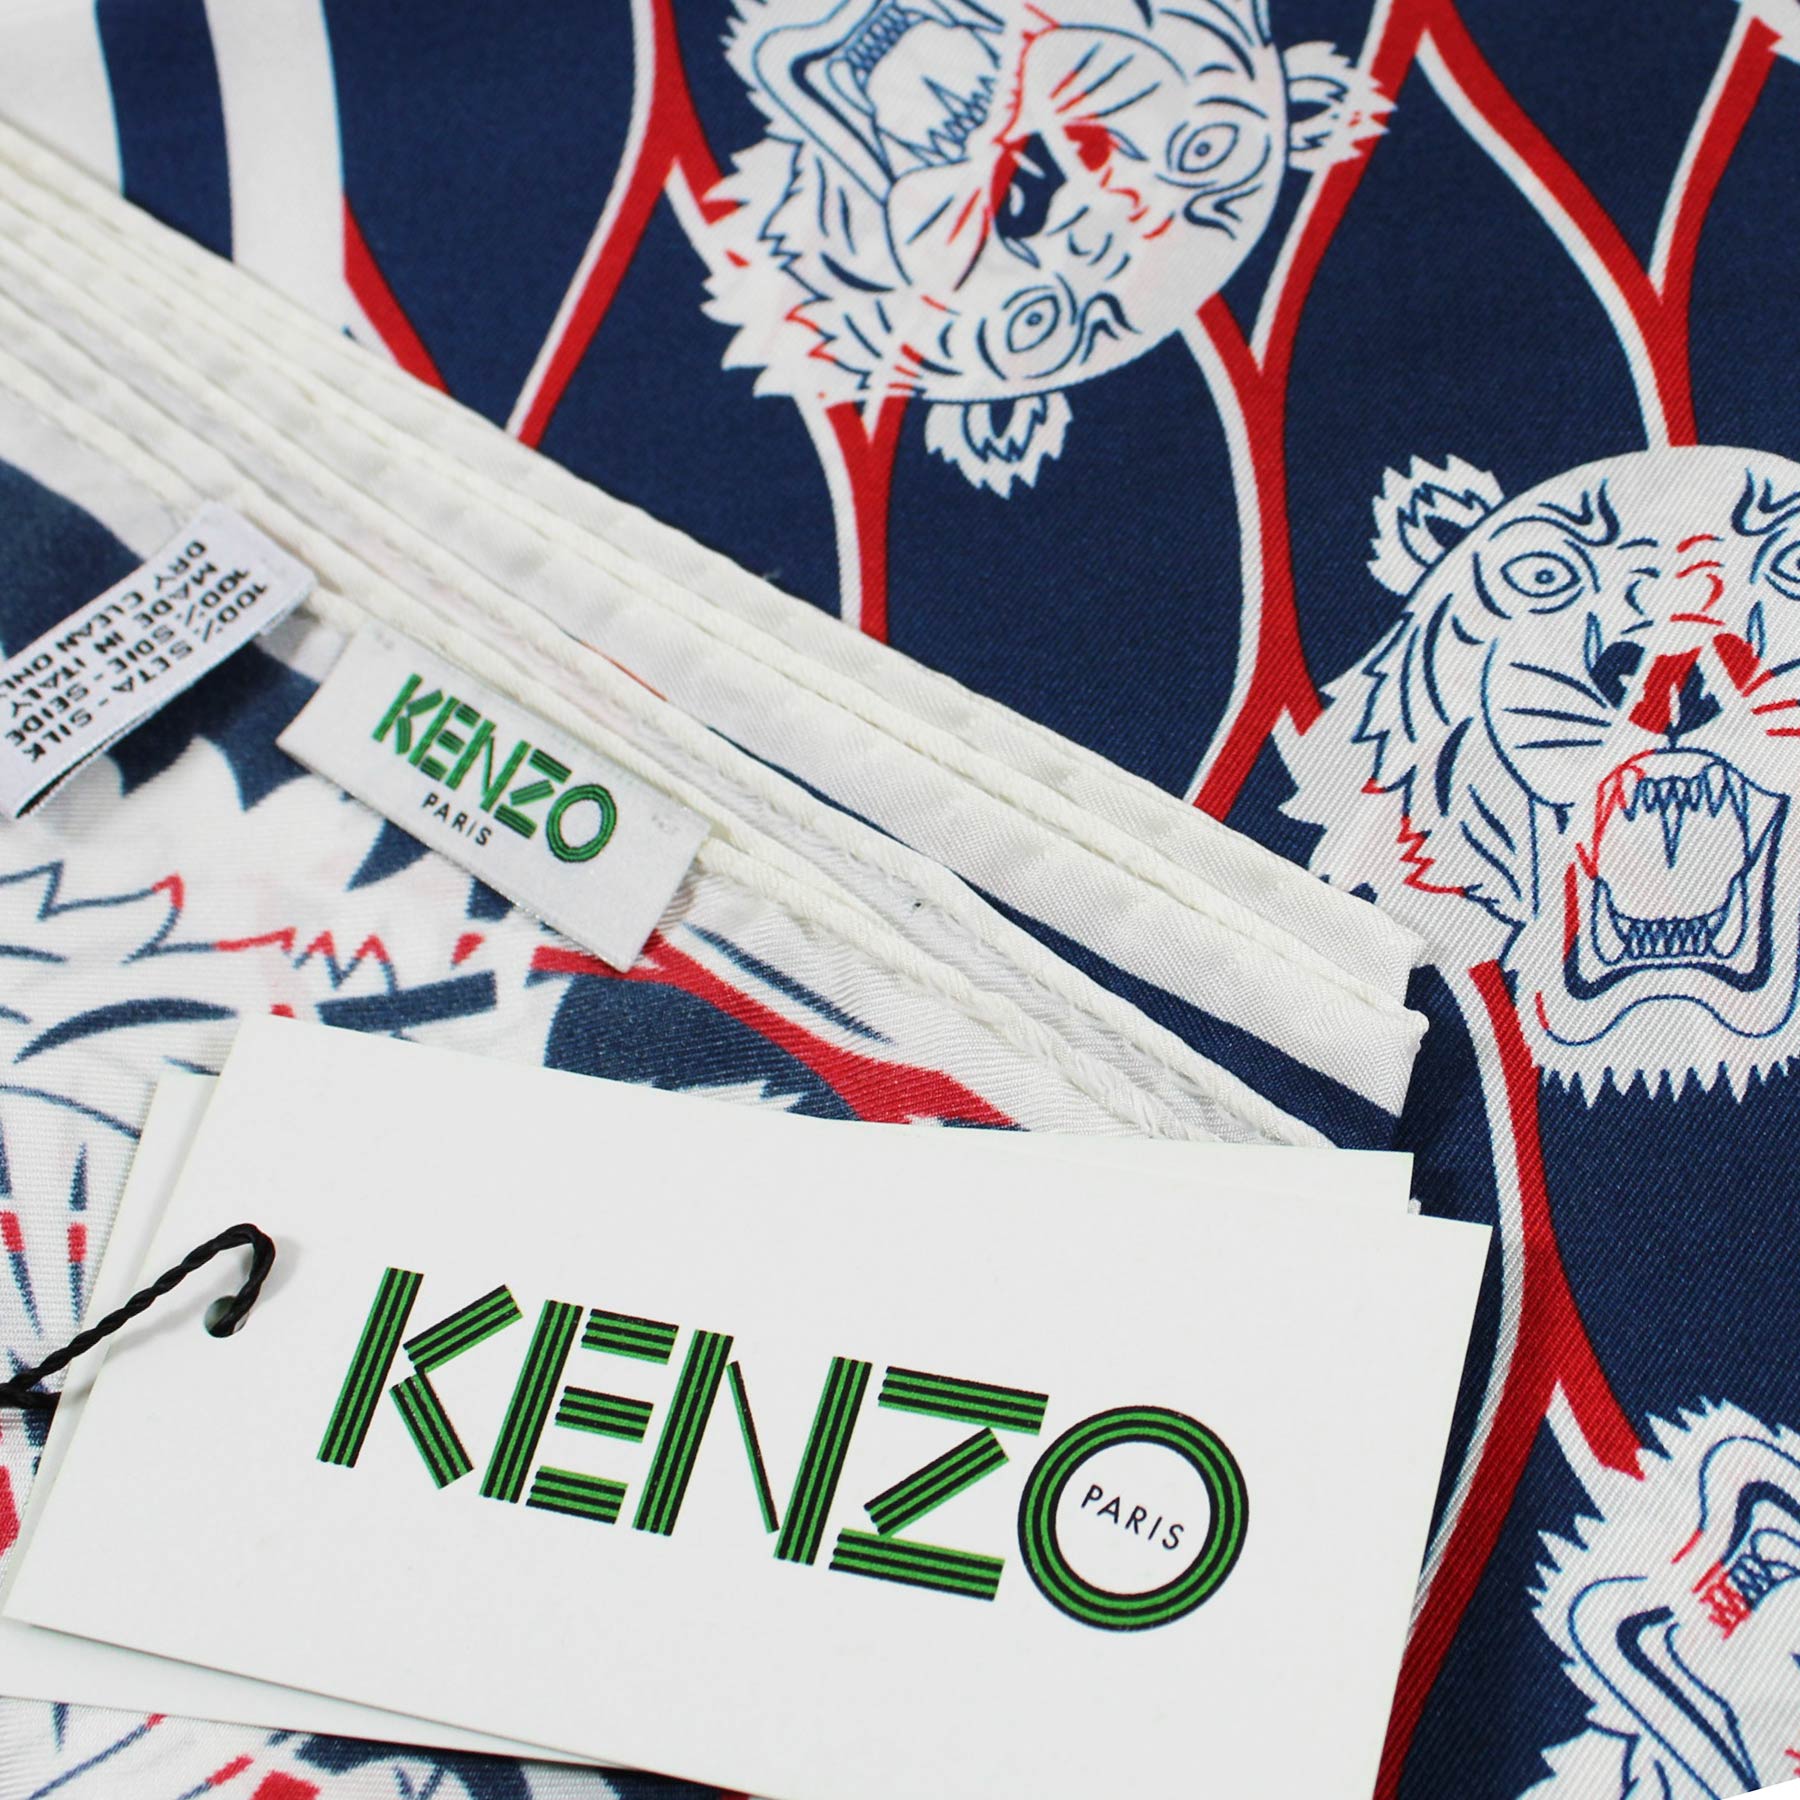 kenzo design